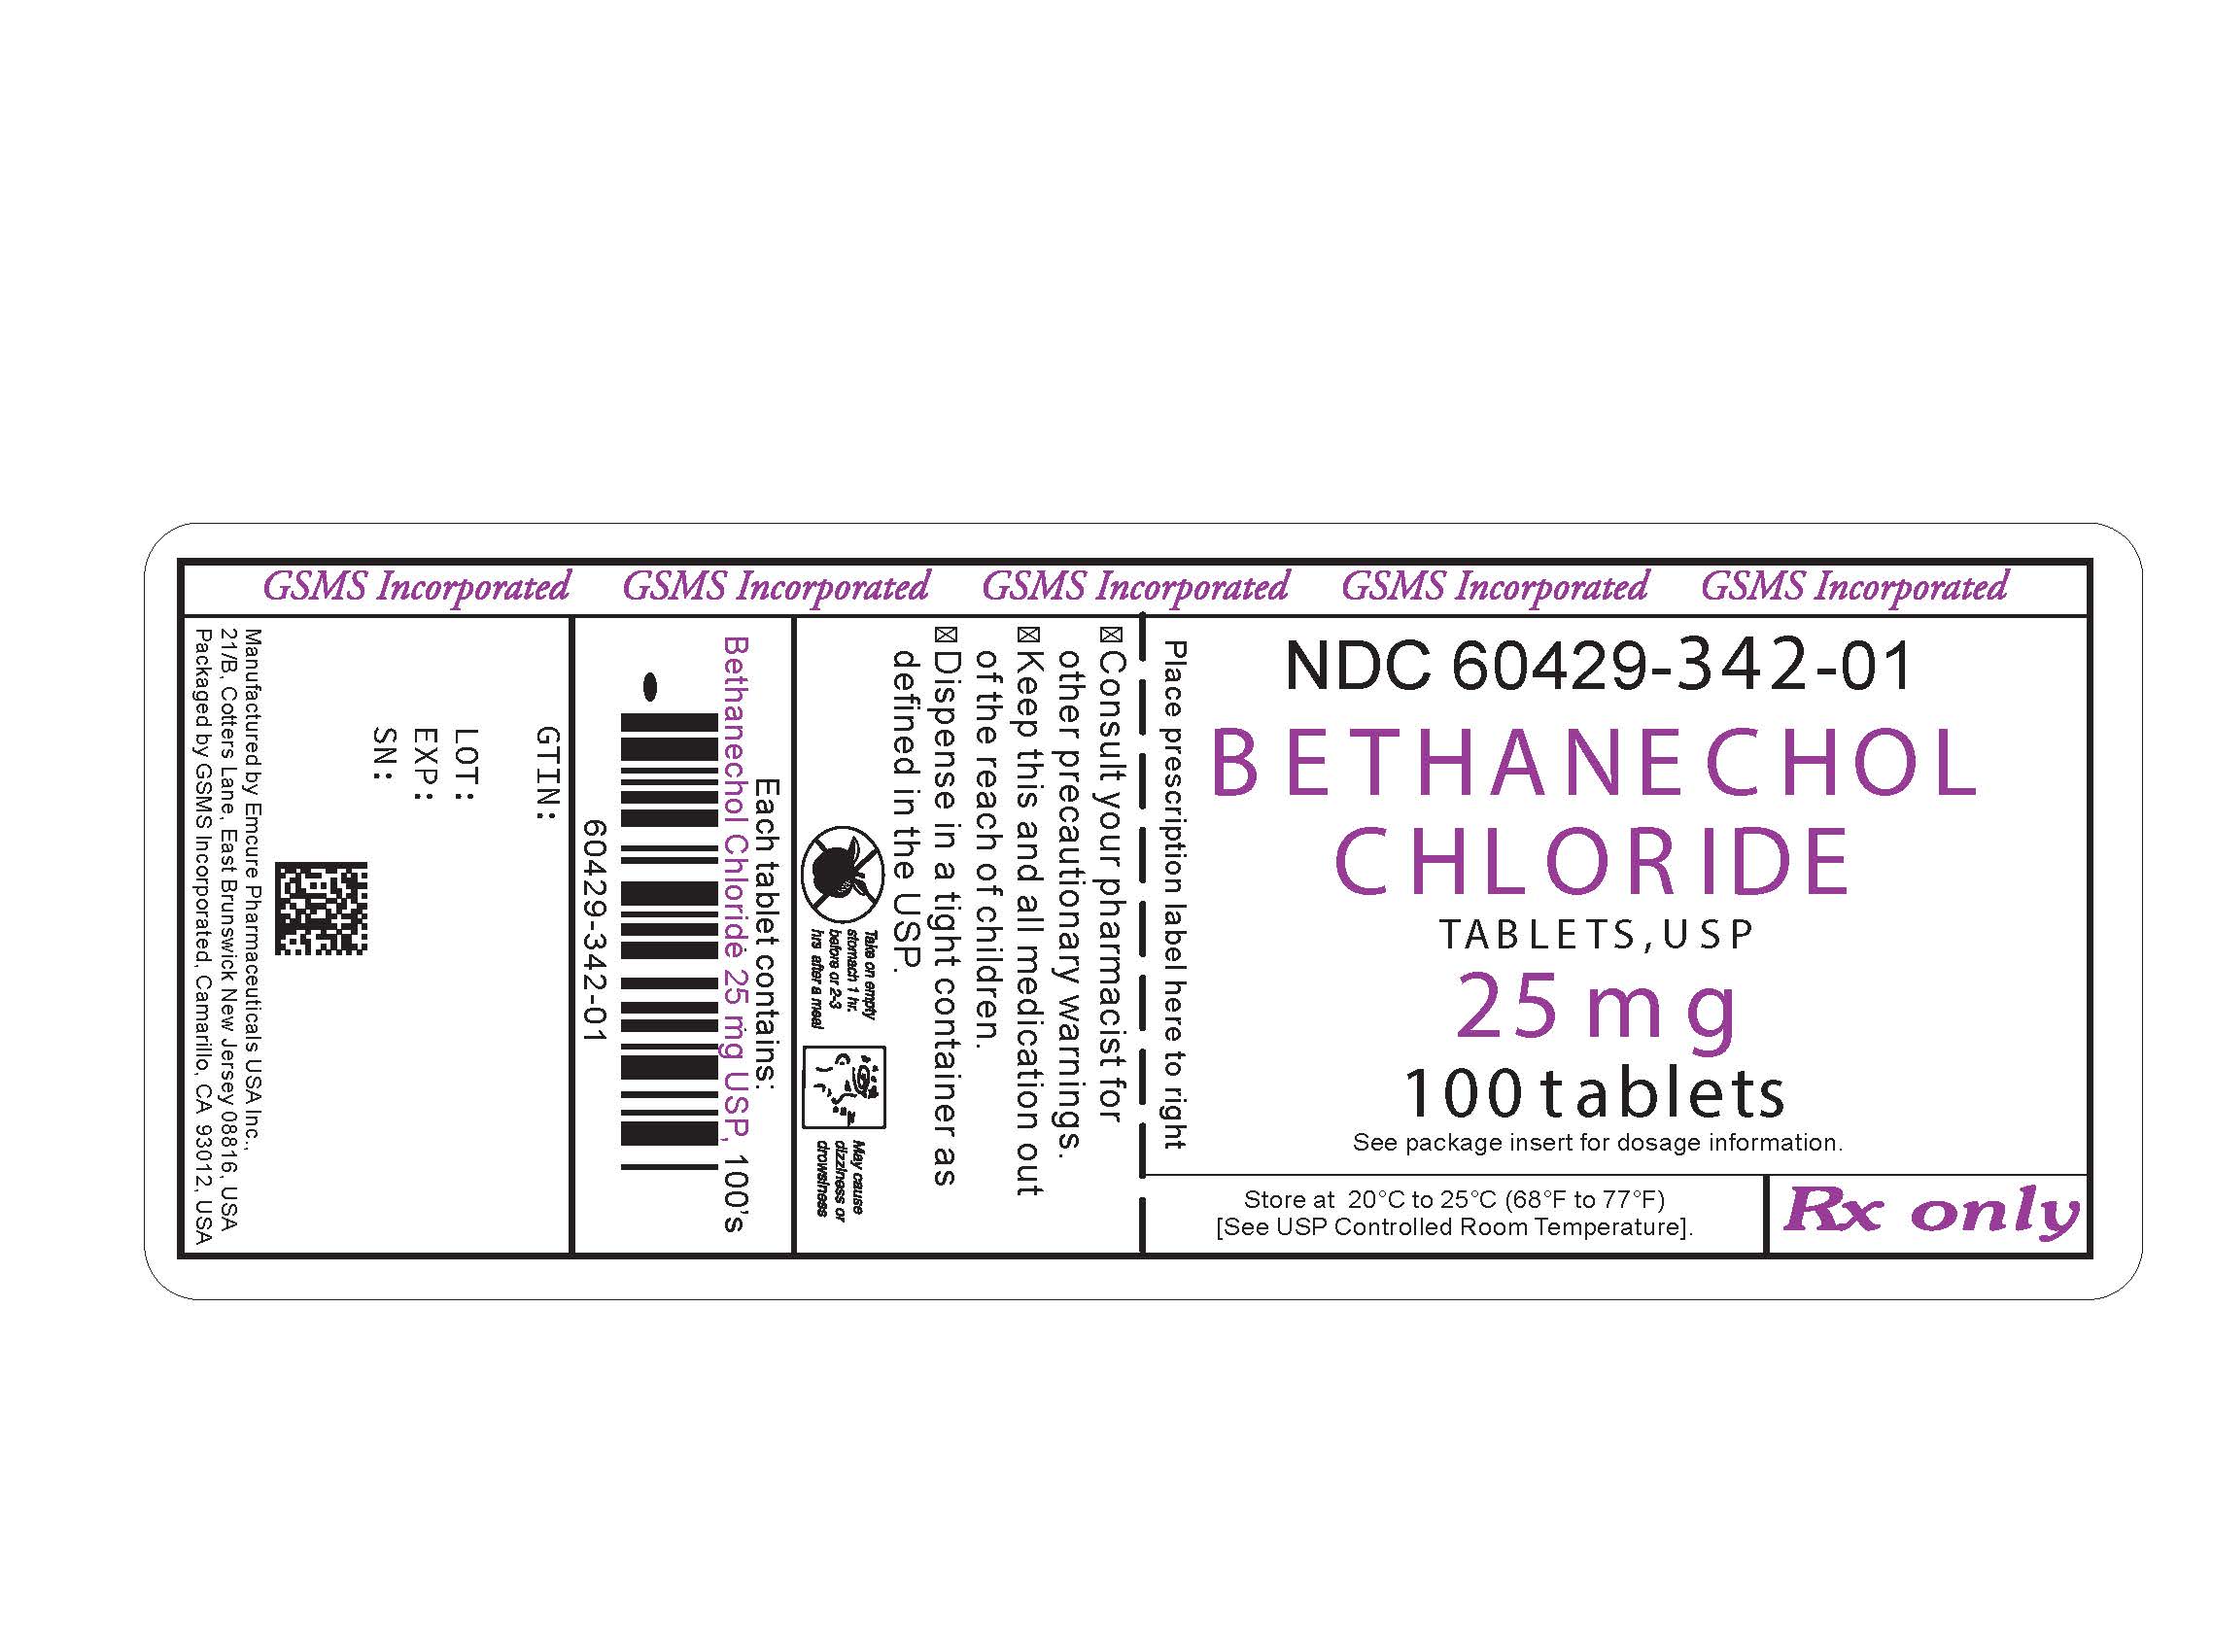 BETHANECHOL CHLORIDE 342-01 02-20-2012.jpg